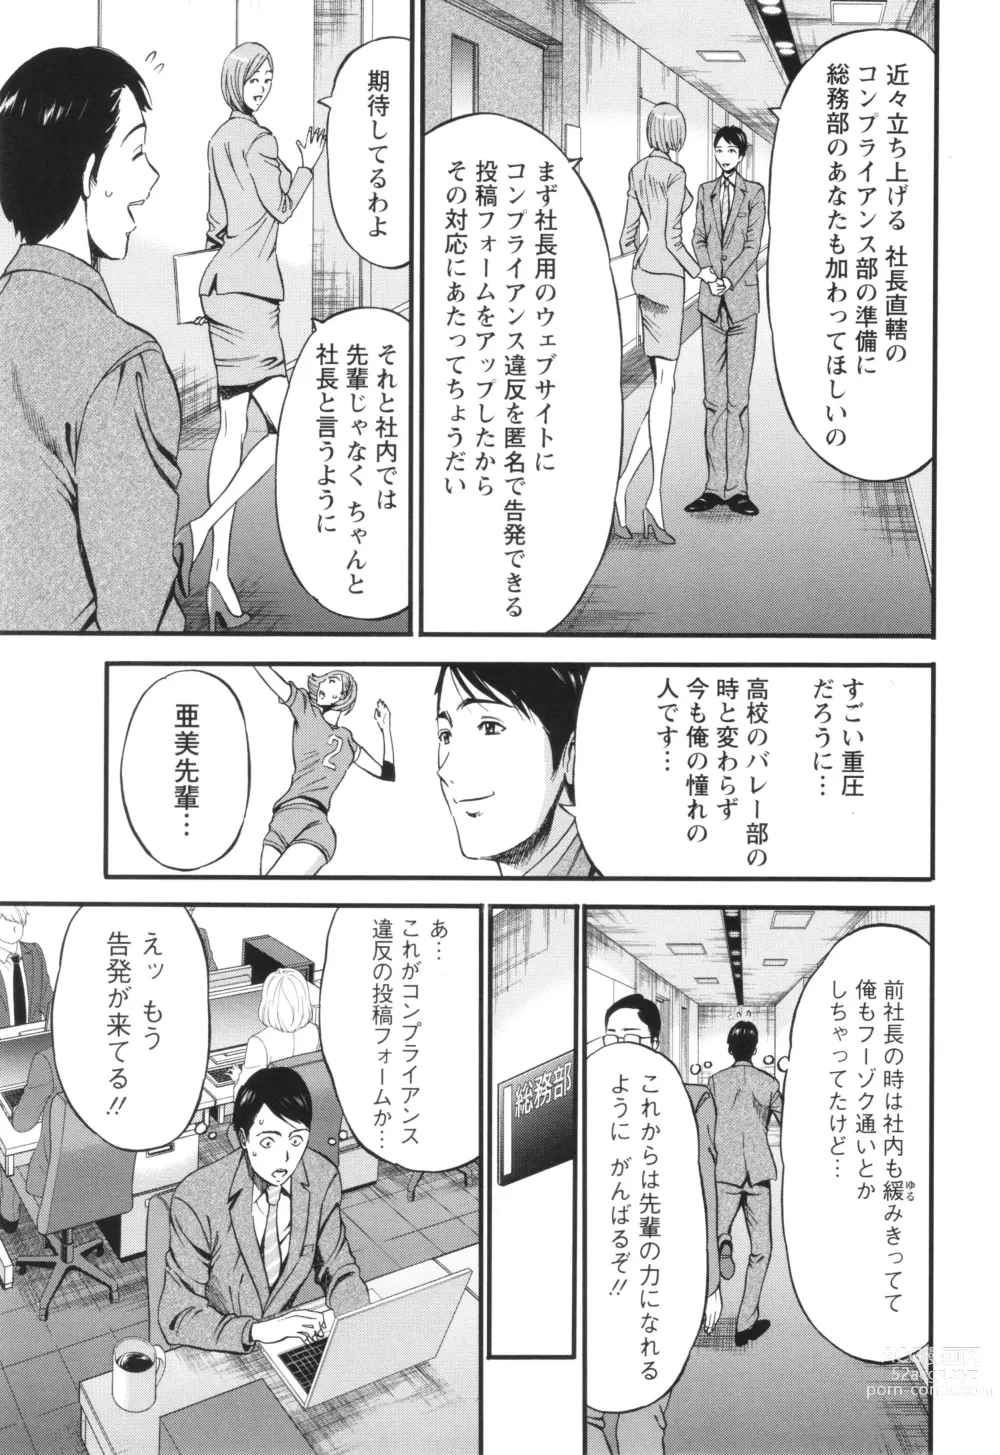 Page 11 of manga Compla Yuruyuru Chimari-san  - Chimaris compliance awareness is very lax.